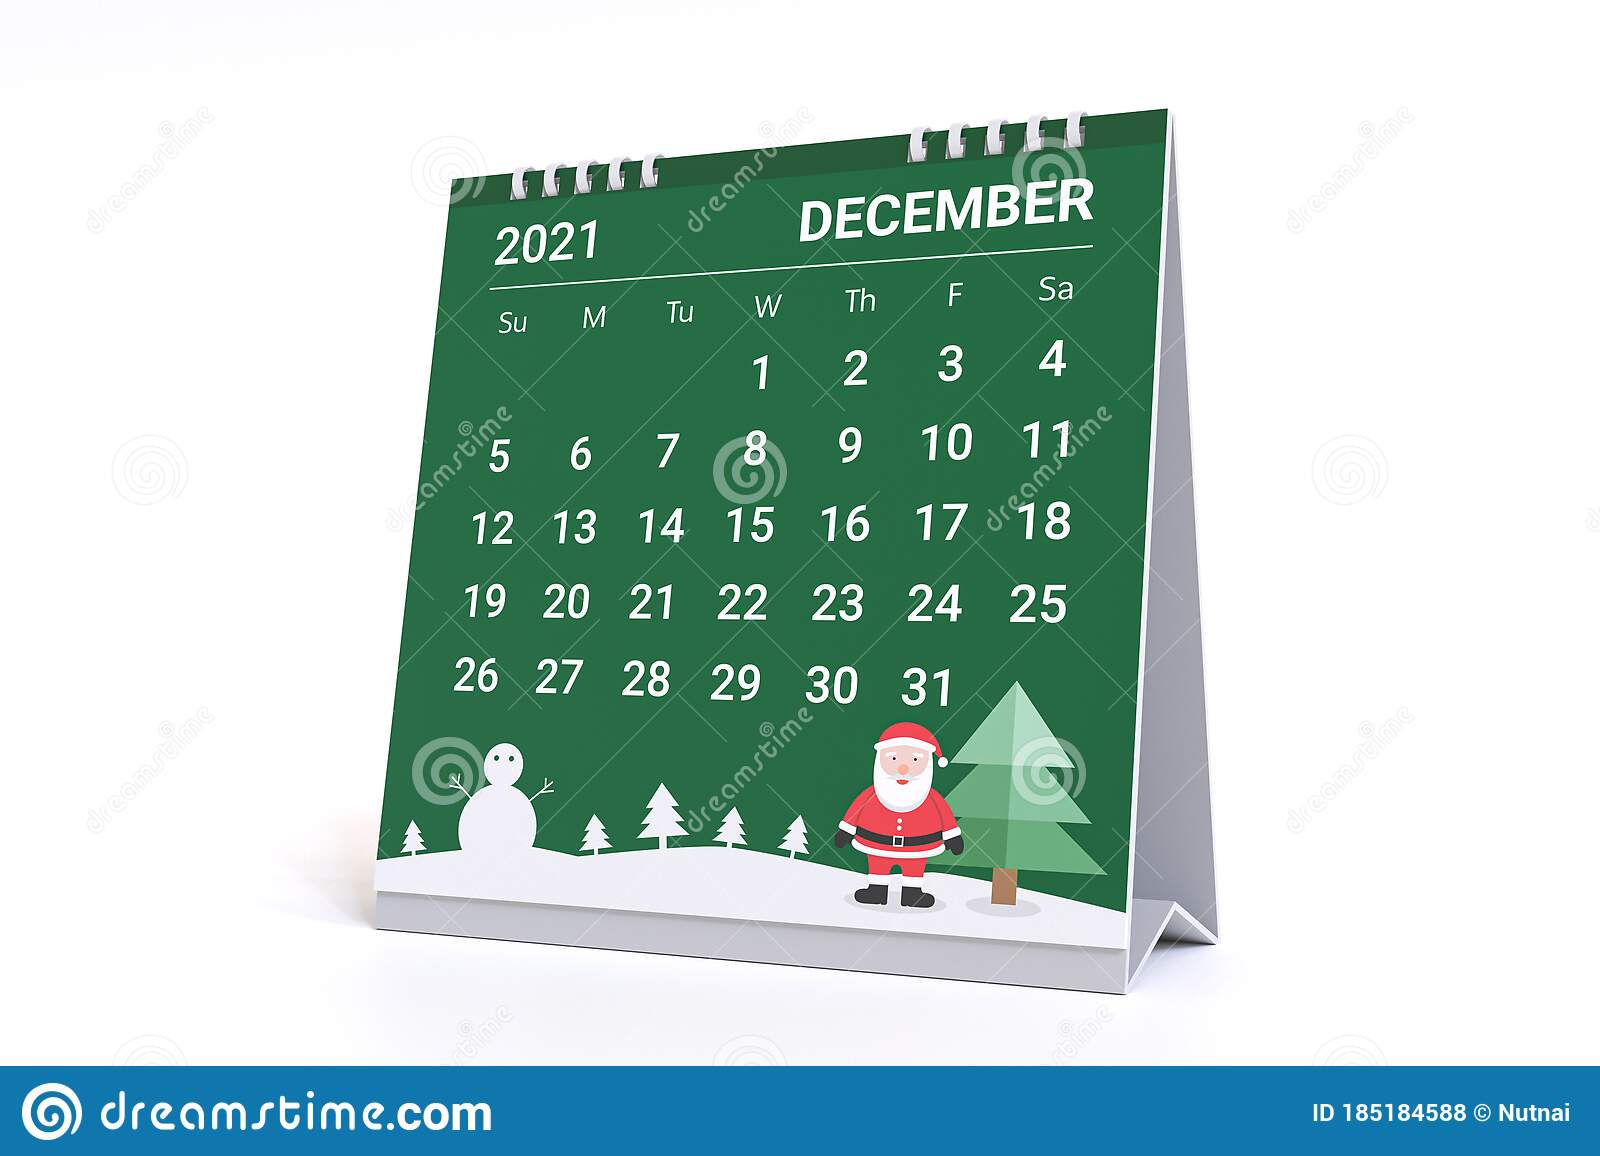 3D Rendering - Calendar For December 2021 With Christmas